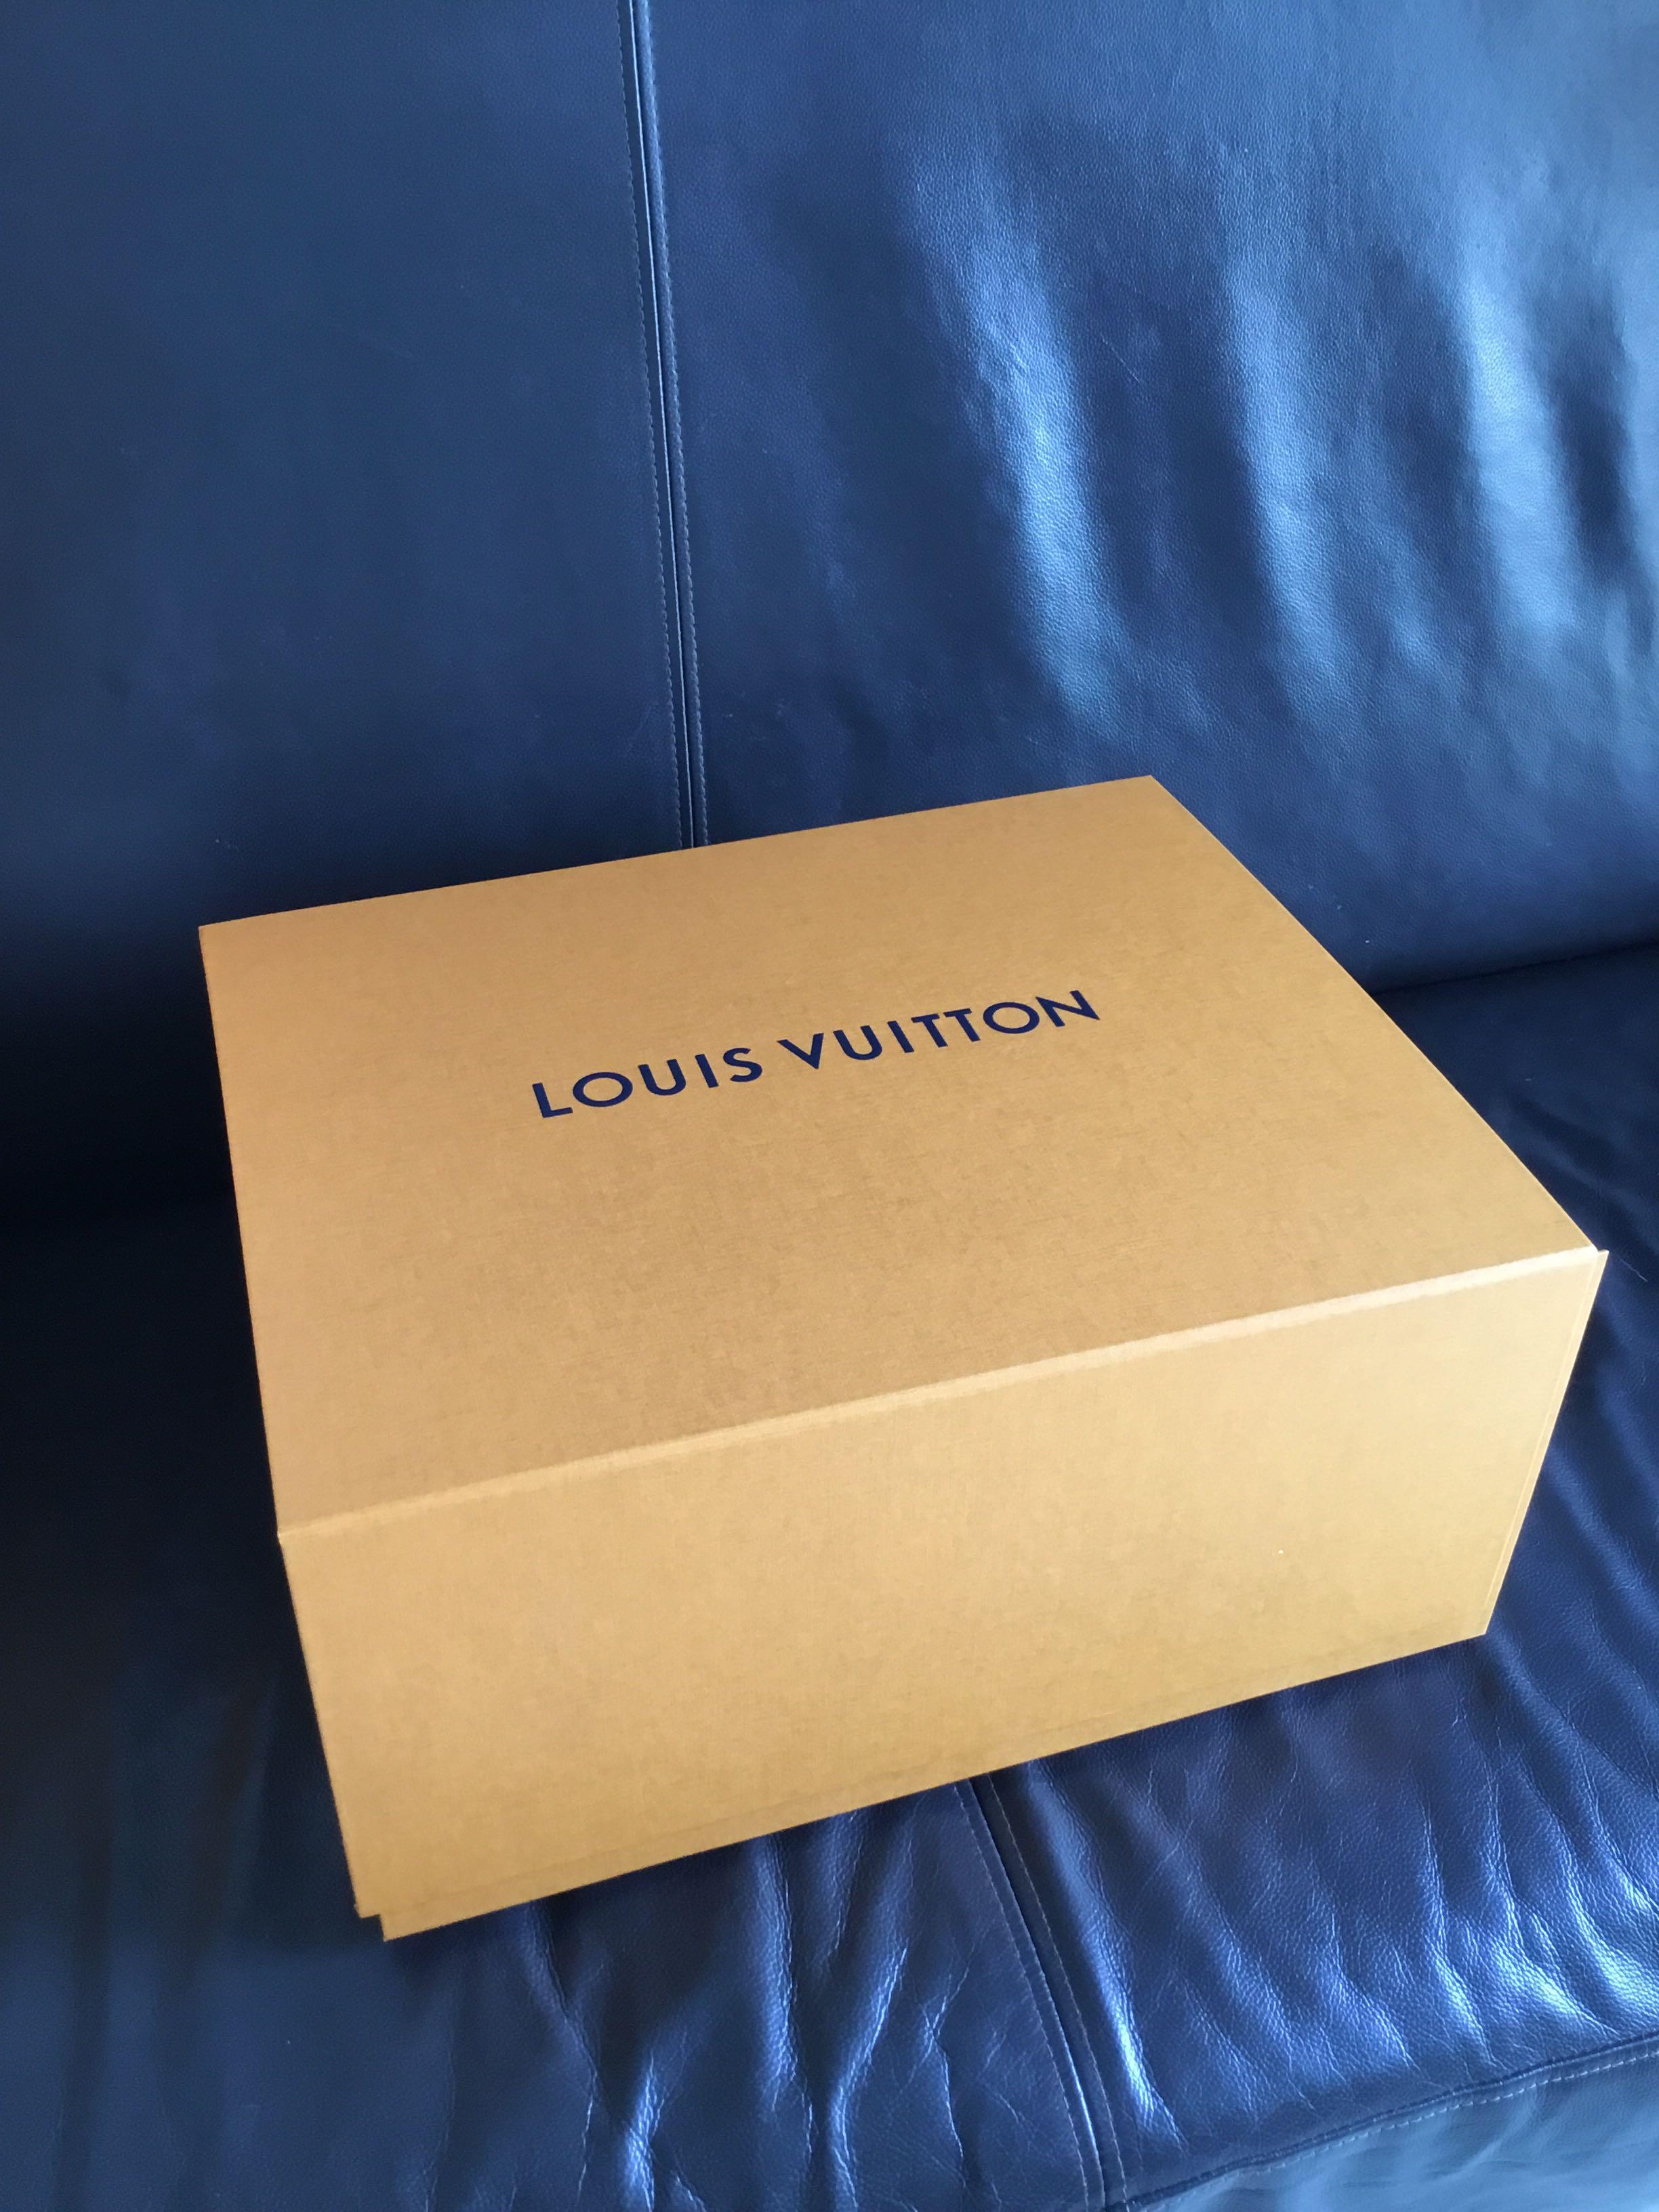 Louis Vuitton Noé BB in Damier Azur to match my 6 Keyholder!  Louis  vuitton noe bb, Louis vuitton handbags, Purses and handbags